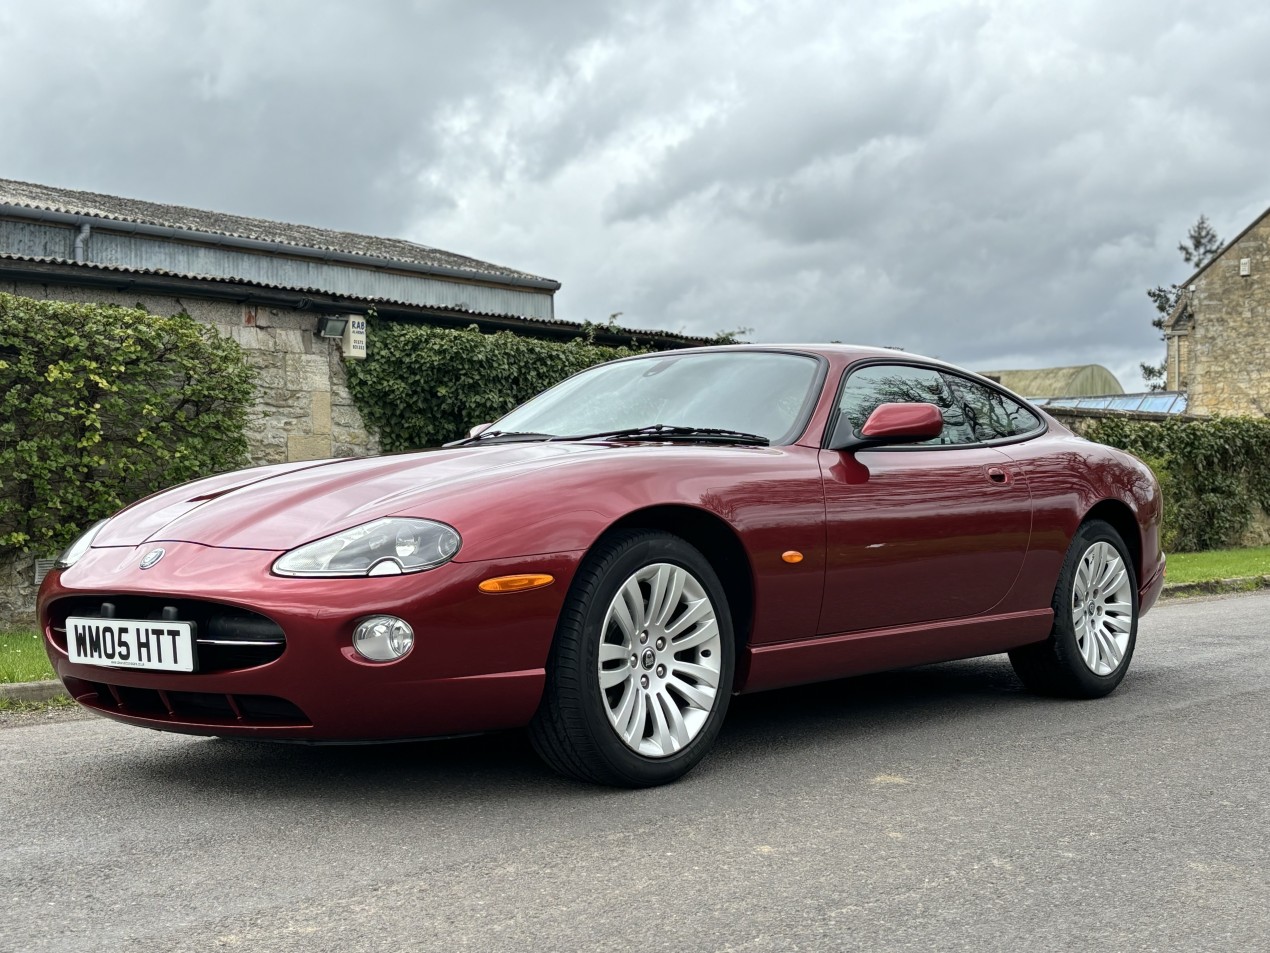 <a href="https://dillybrook.co.uk/product/2004-jaguar-xk8-4-2-v8-coupe/">2004 Jaguar XK8 4.2 V8 Coupe</a>